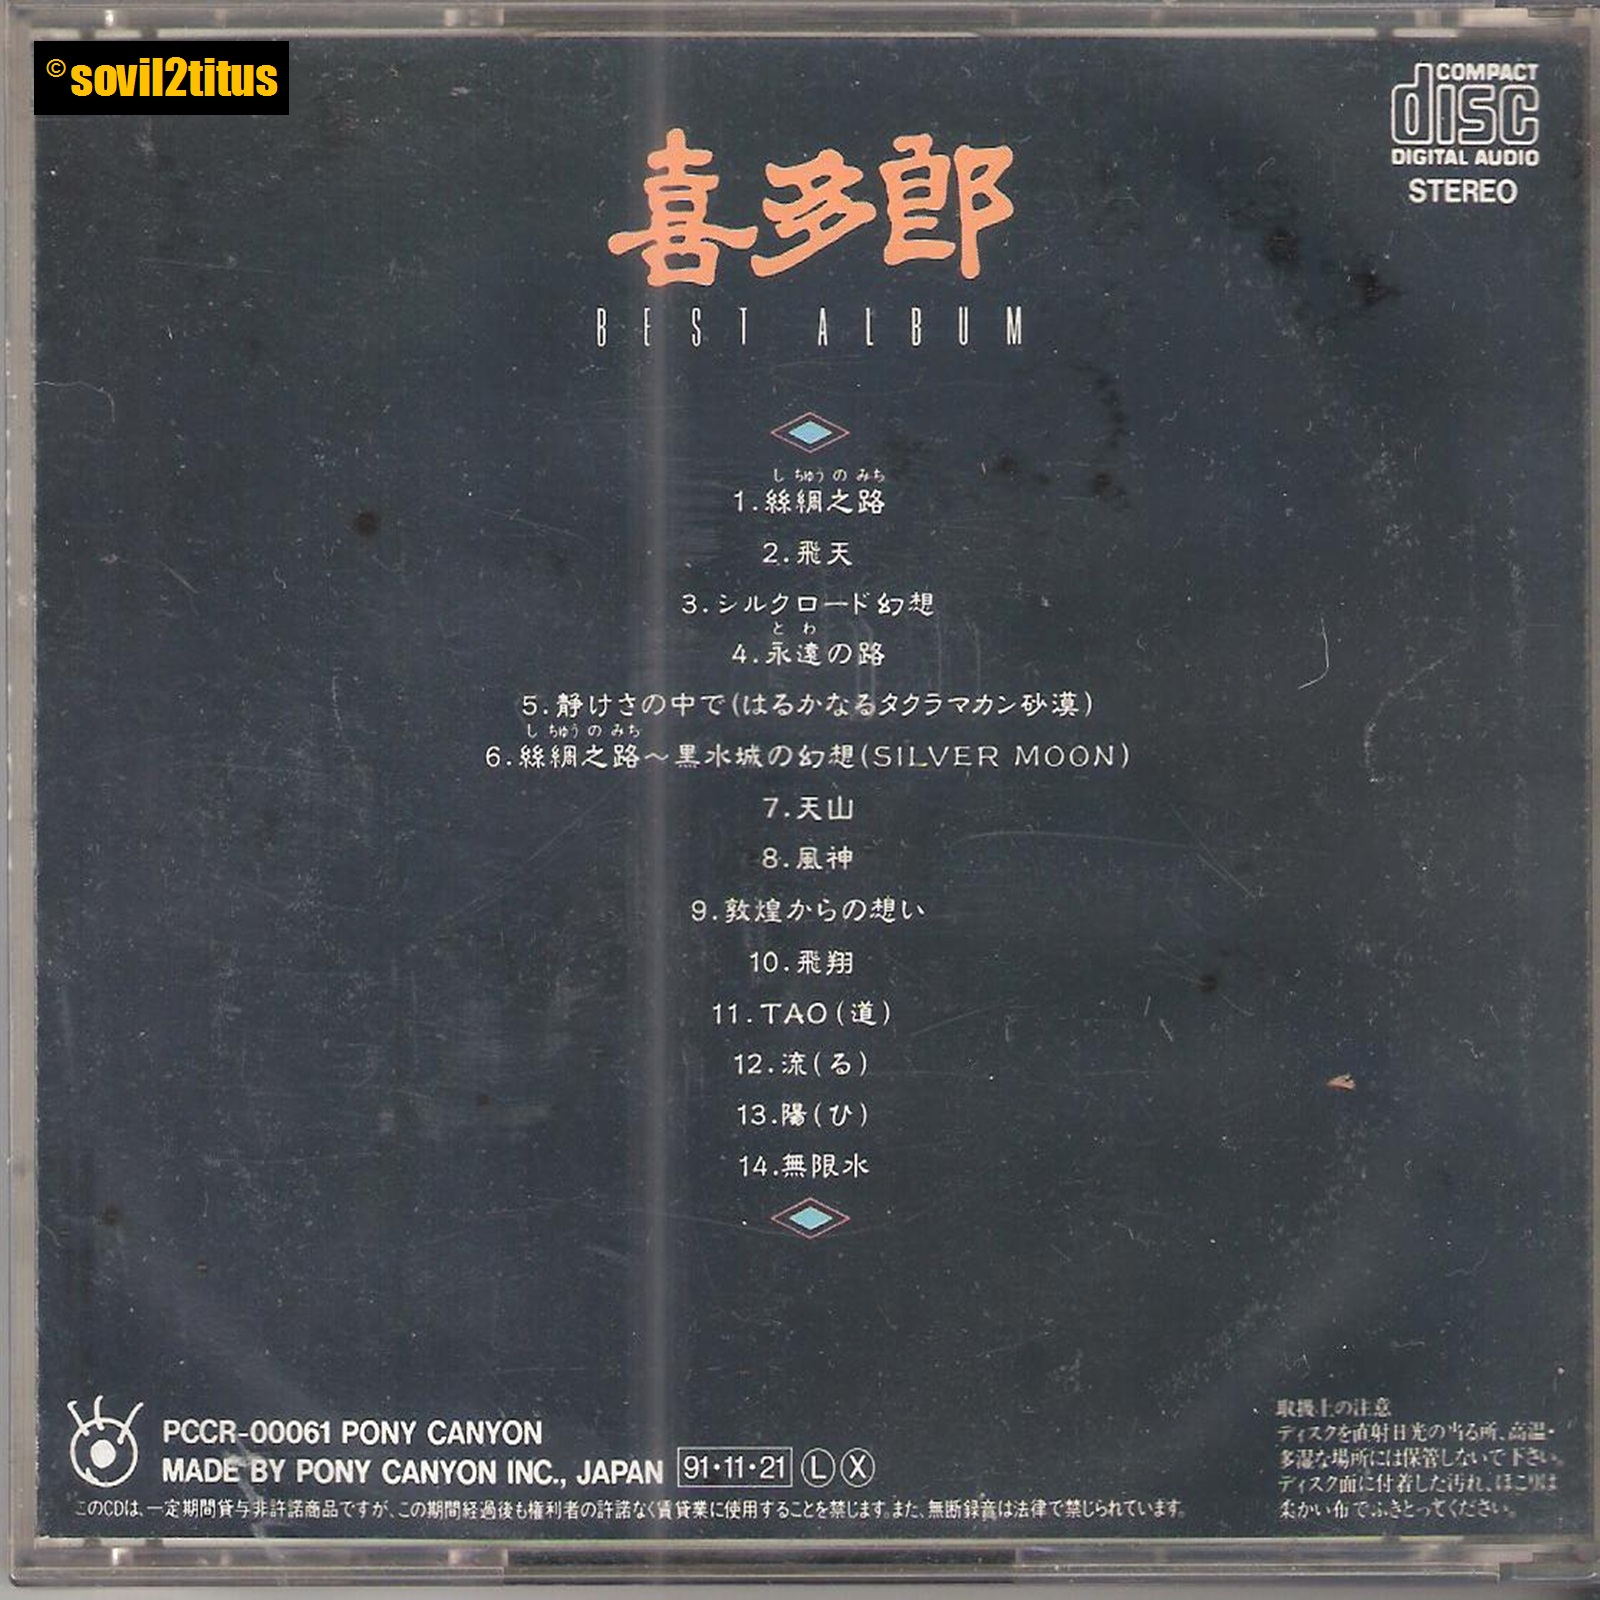 My Music Store Sold S 12 00 Cd 1991 喜多郎 Kitaro Best Album 2676